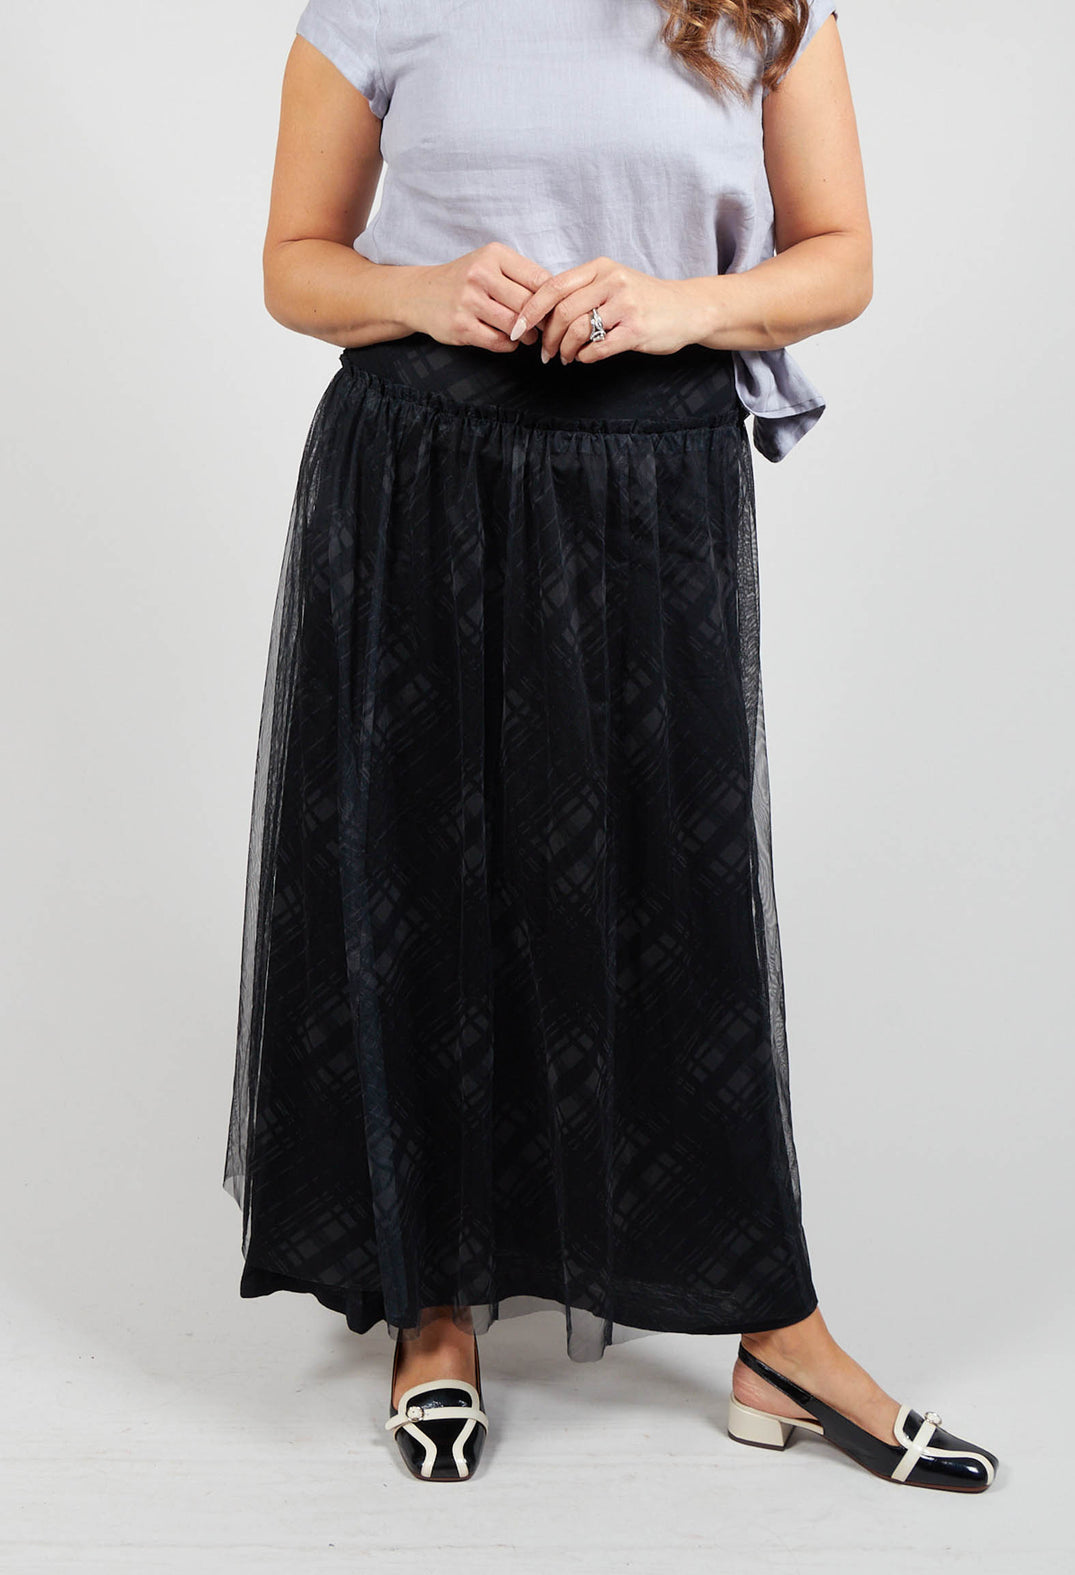 Fine Jersey Skirt with Net Overlay in inox